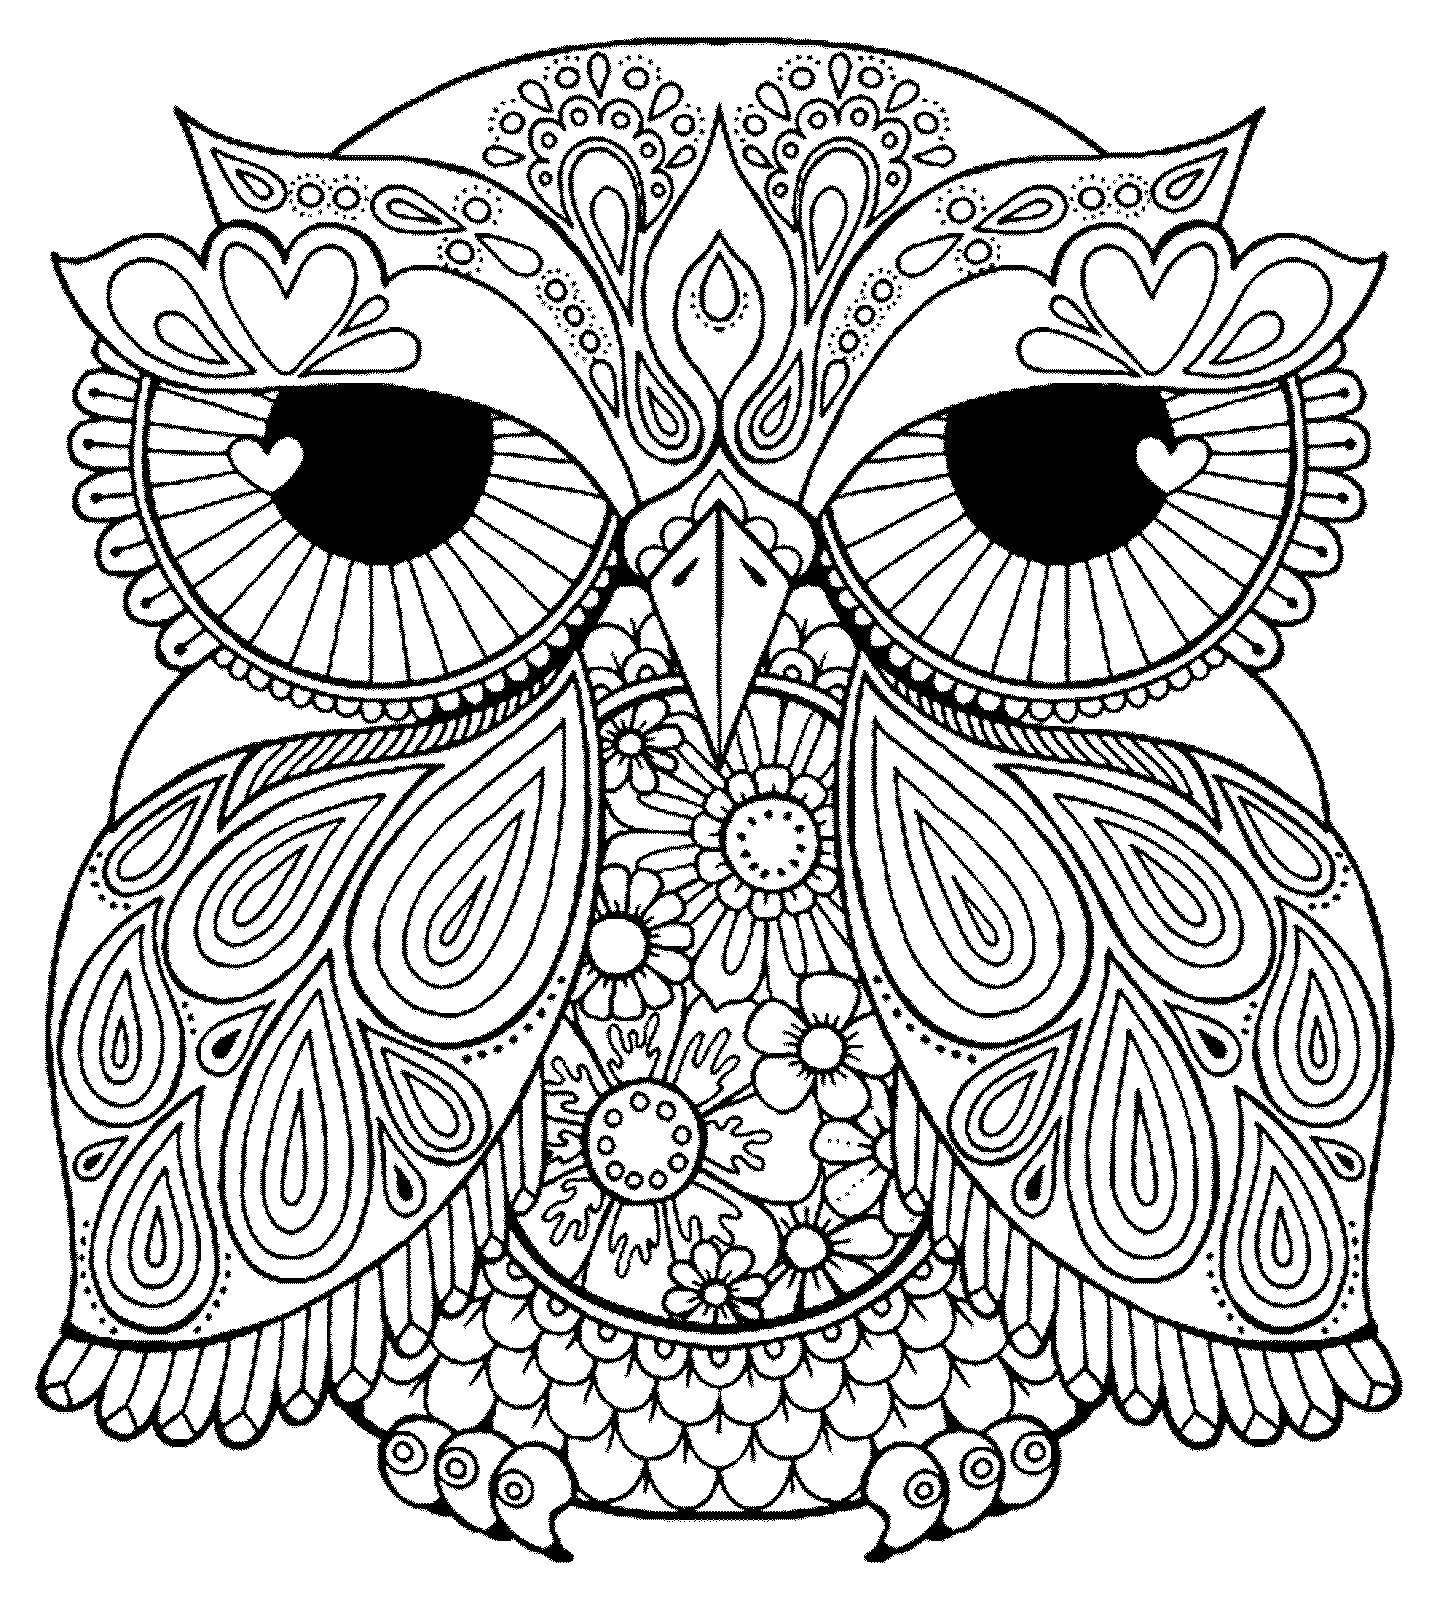 Coloring Pages For Adults Mandala
 Owl Mandala Coloring Pages Gallery Free Coloring Books